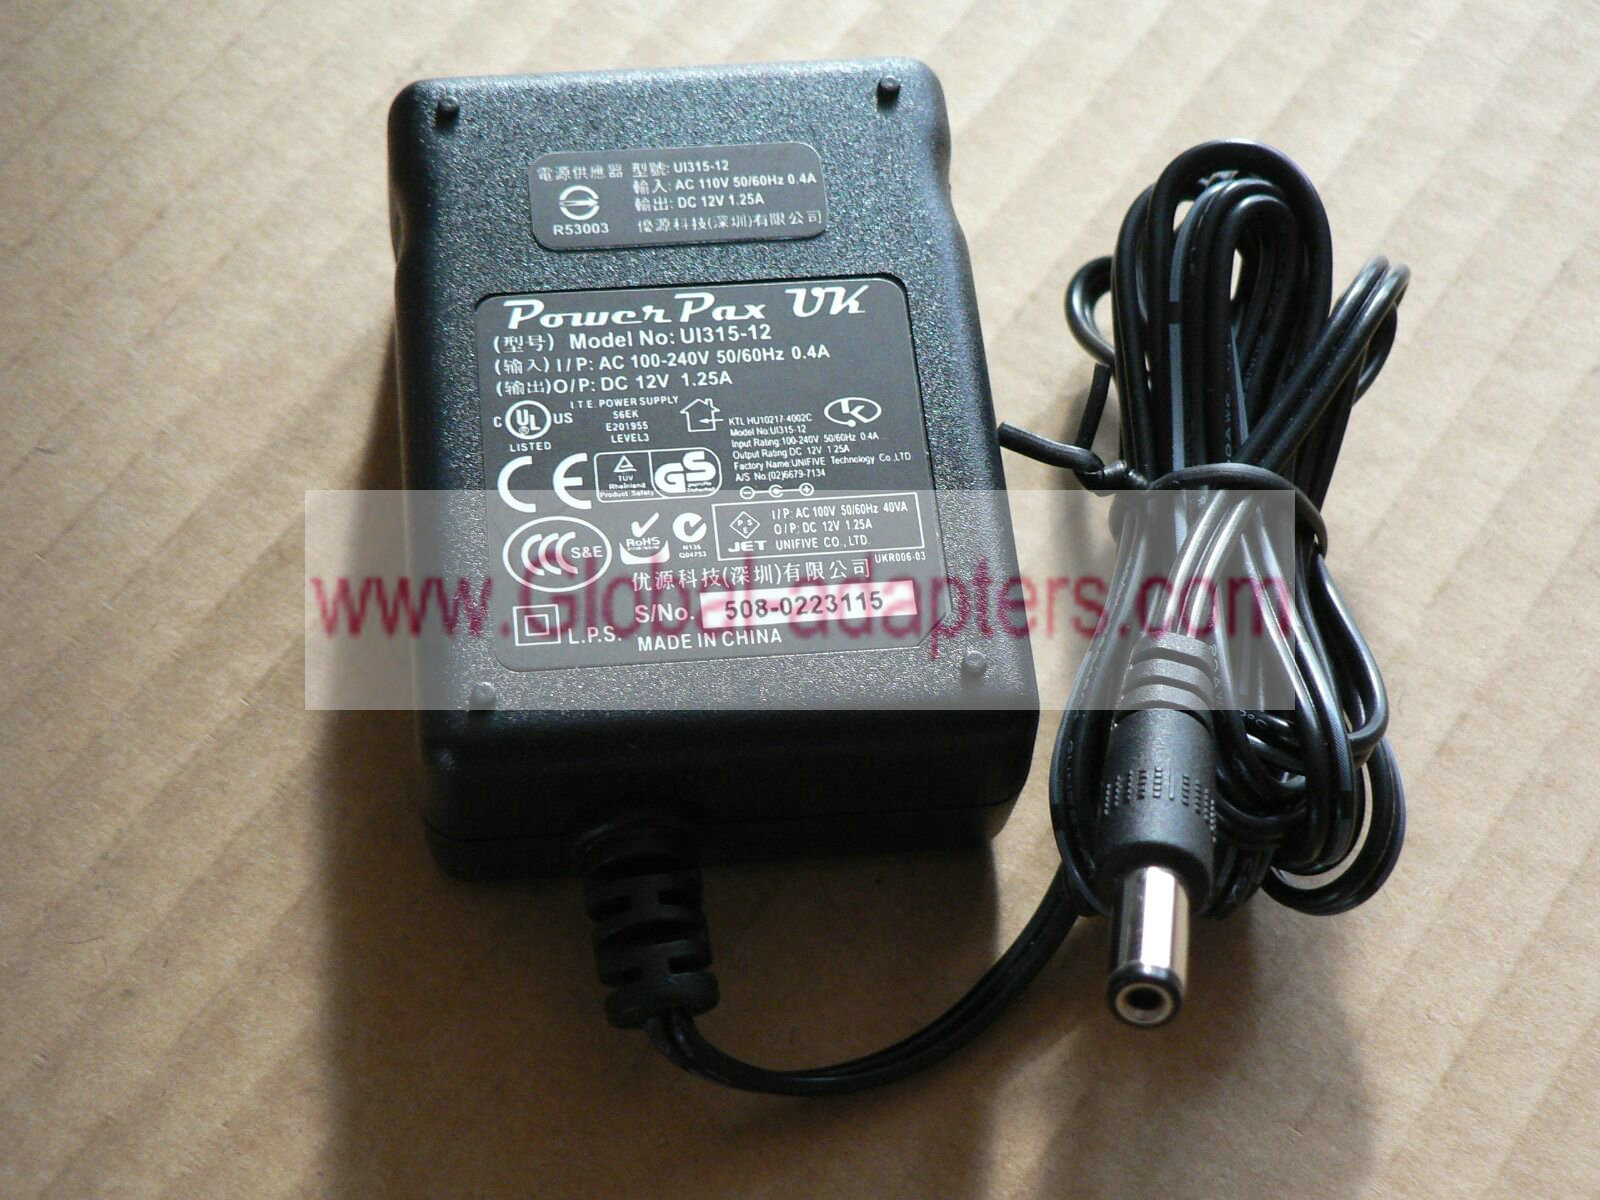 New PowerPax UK UI315-12 UK 12VDC 1.25A Regulated Desktop Power Supply - Click Image to Close